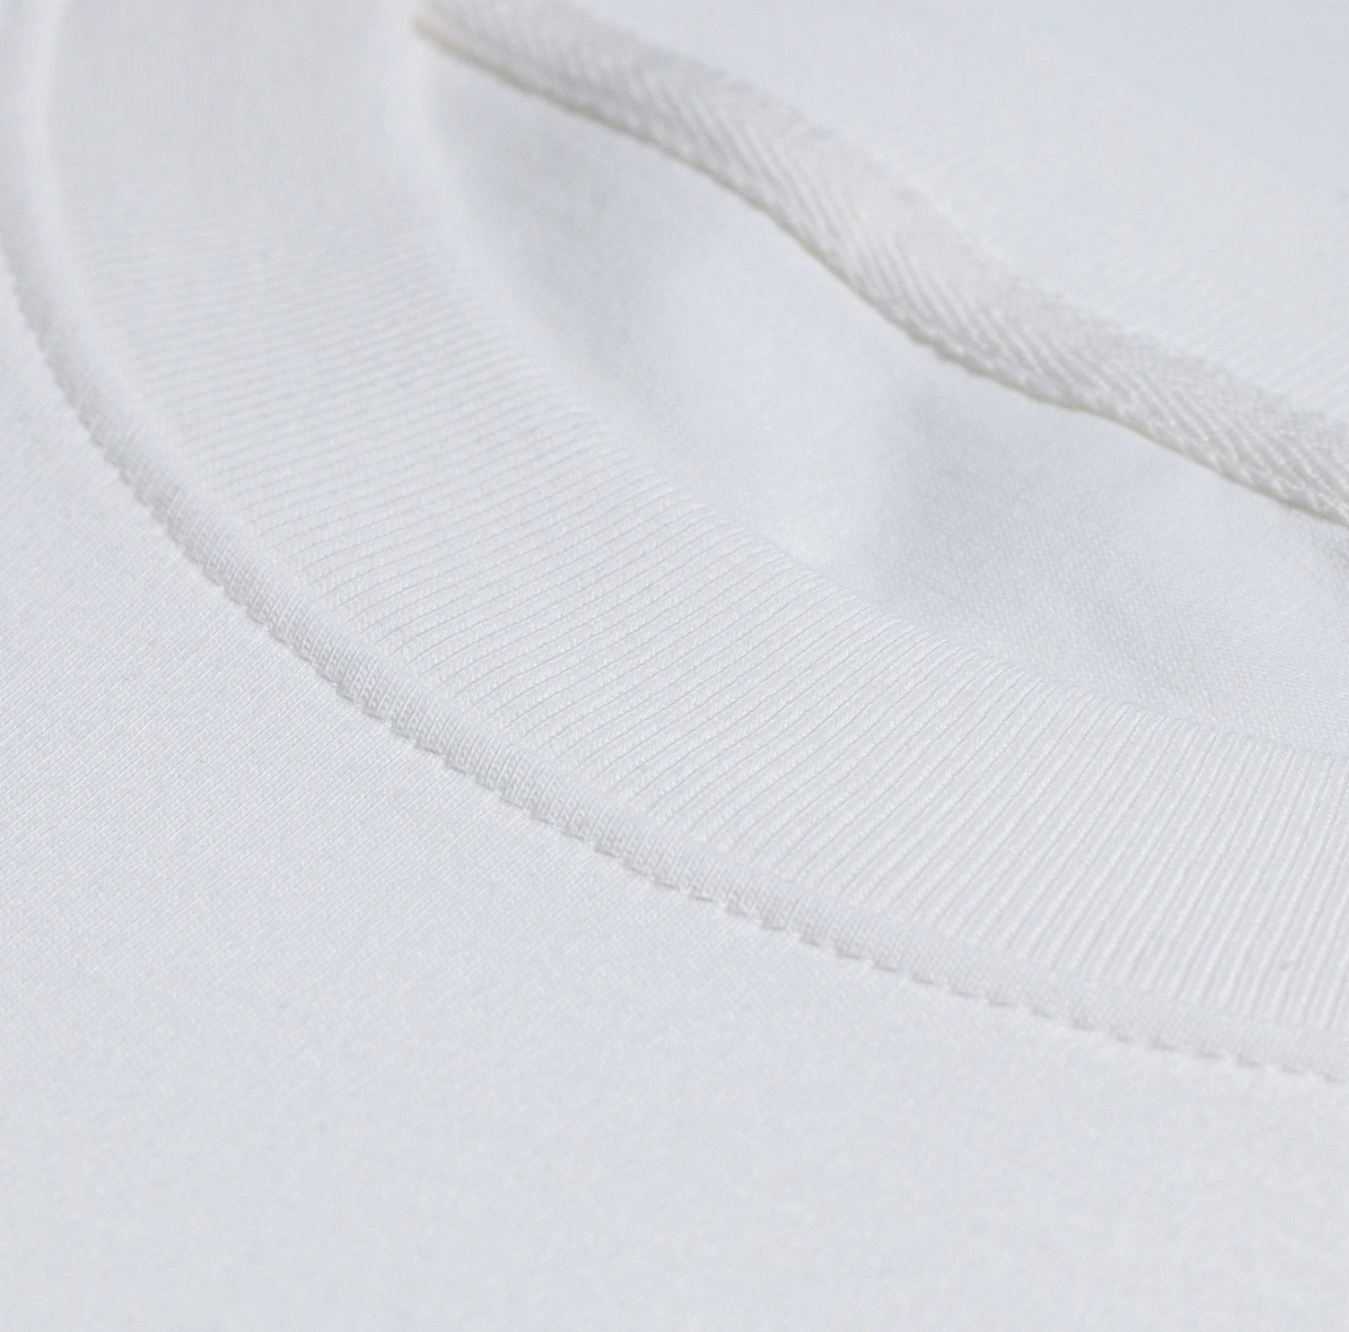 Garment fabric neck close up